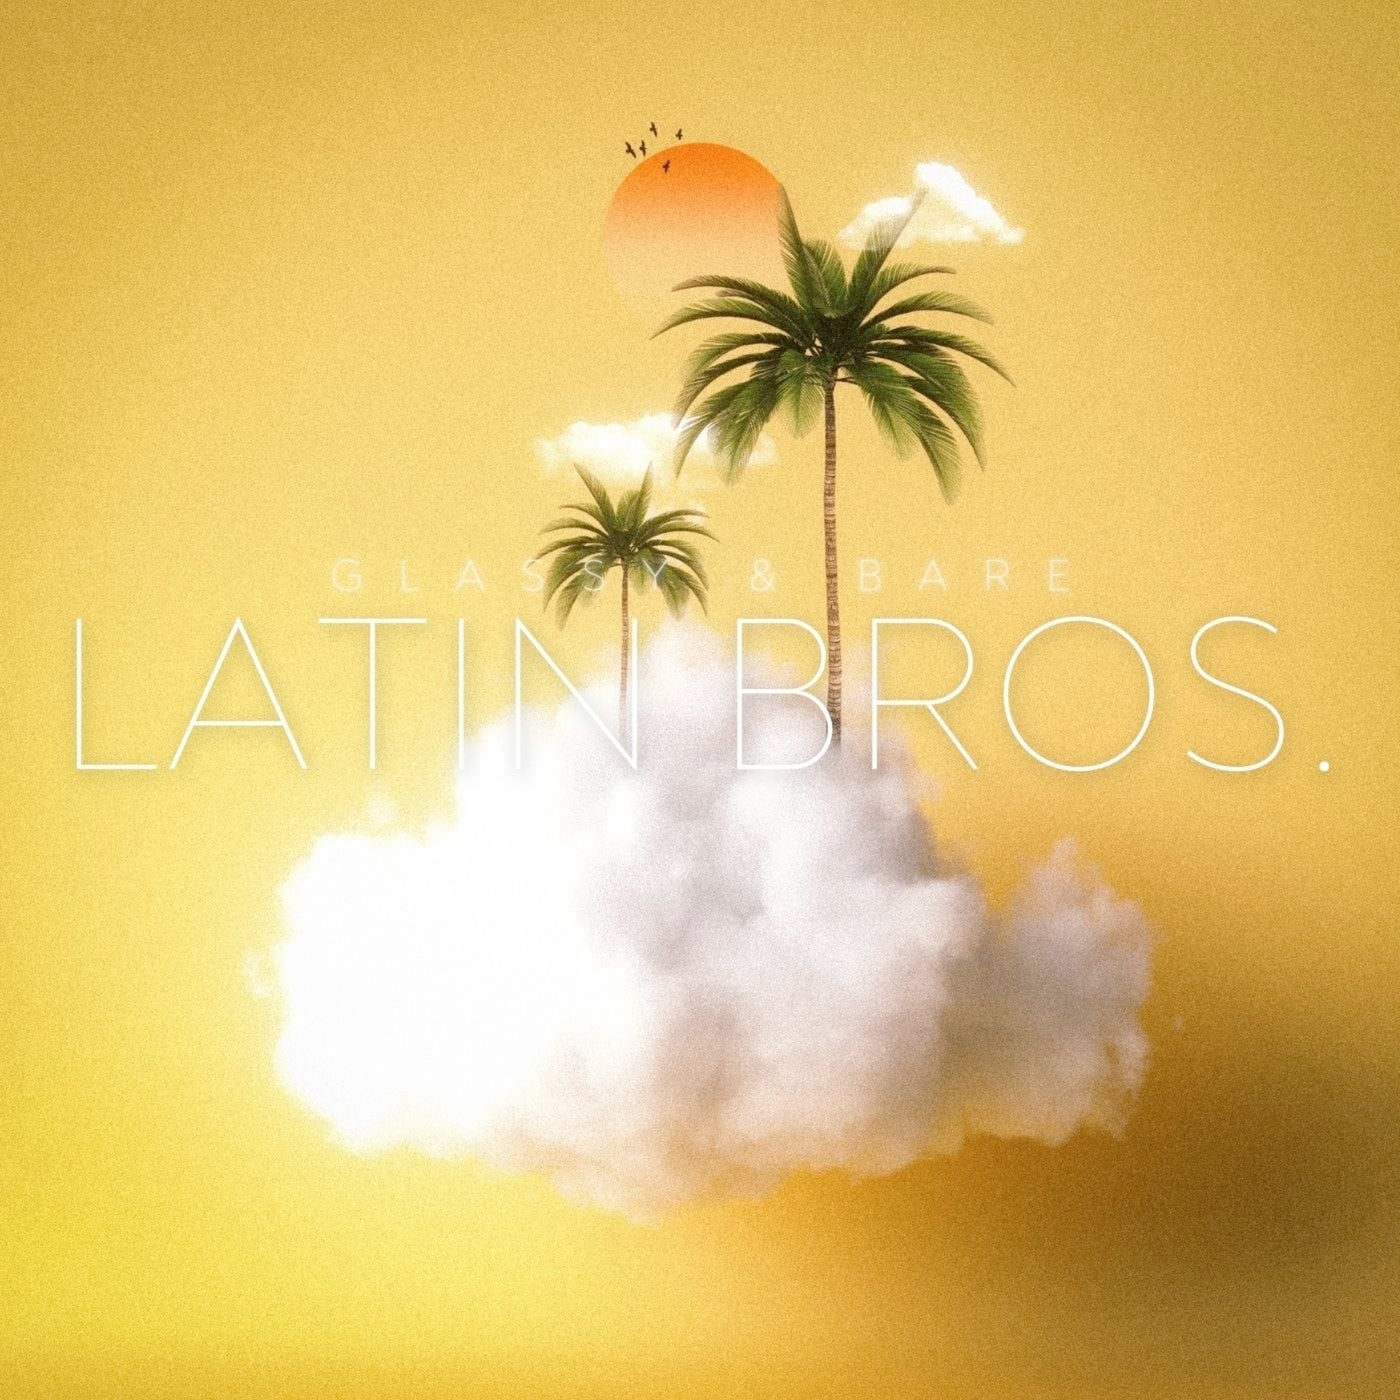 Cover - Glassy & Bare - Latin Bros. (Original Mix)